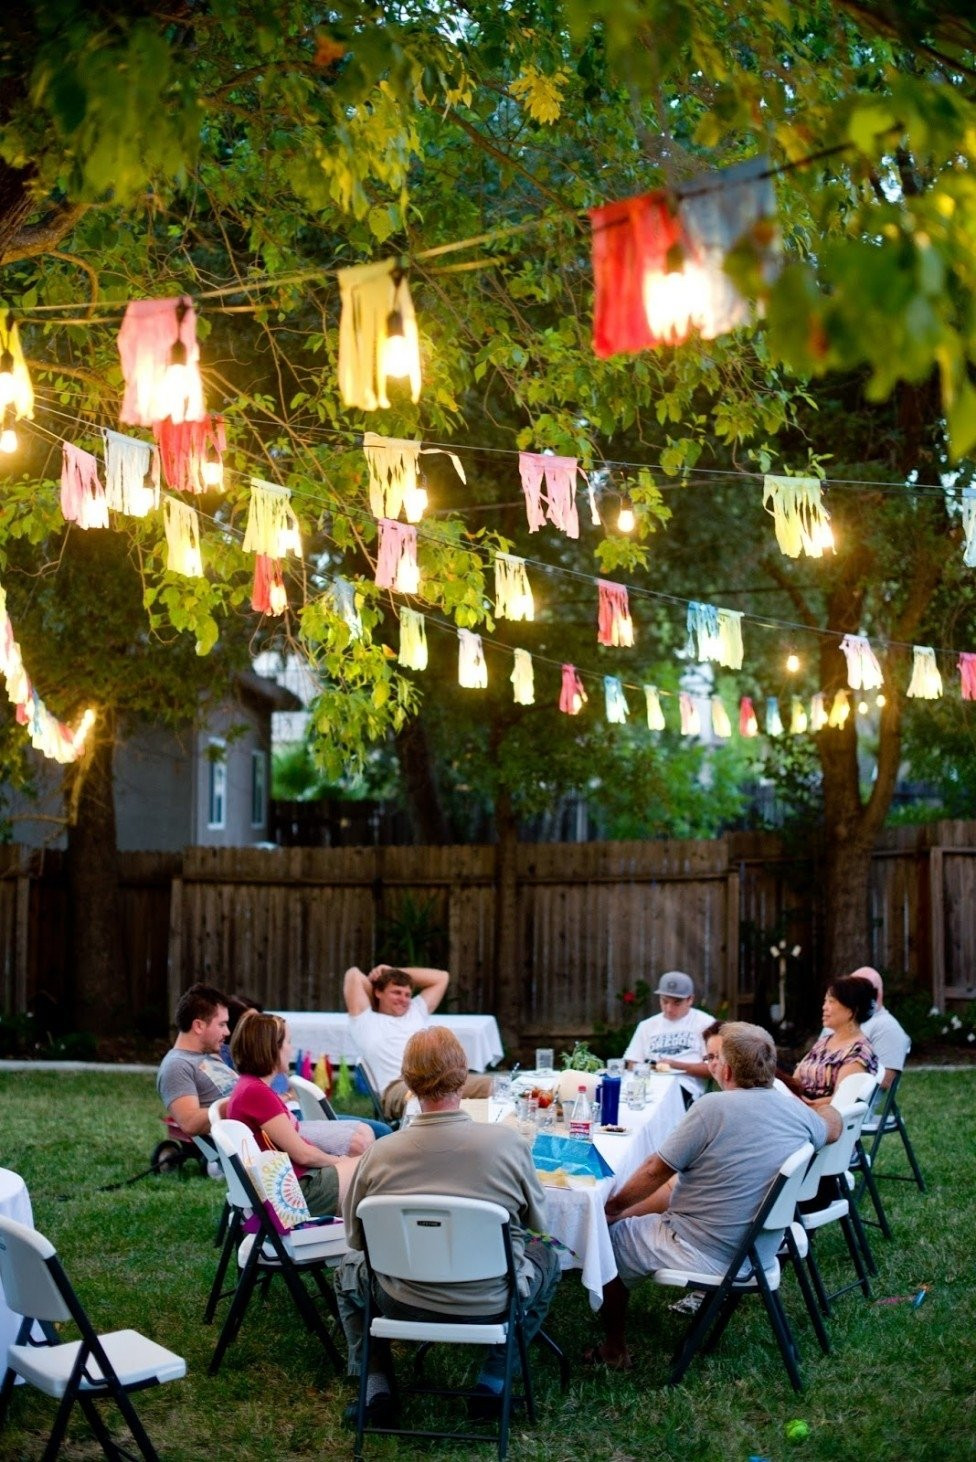 Backyard 18Th Birthday Party Ideas
 10 Famous Outdoor Birthday Party Ideas For Adults 2019